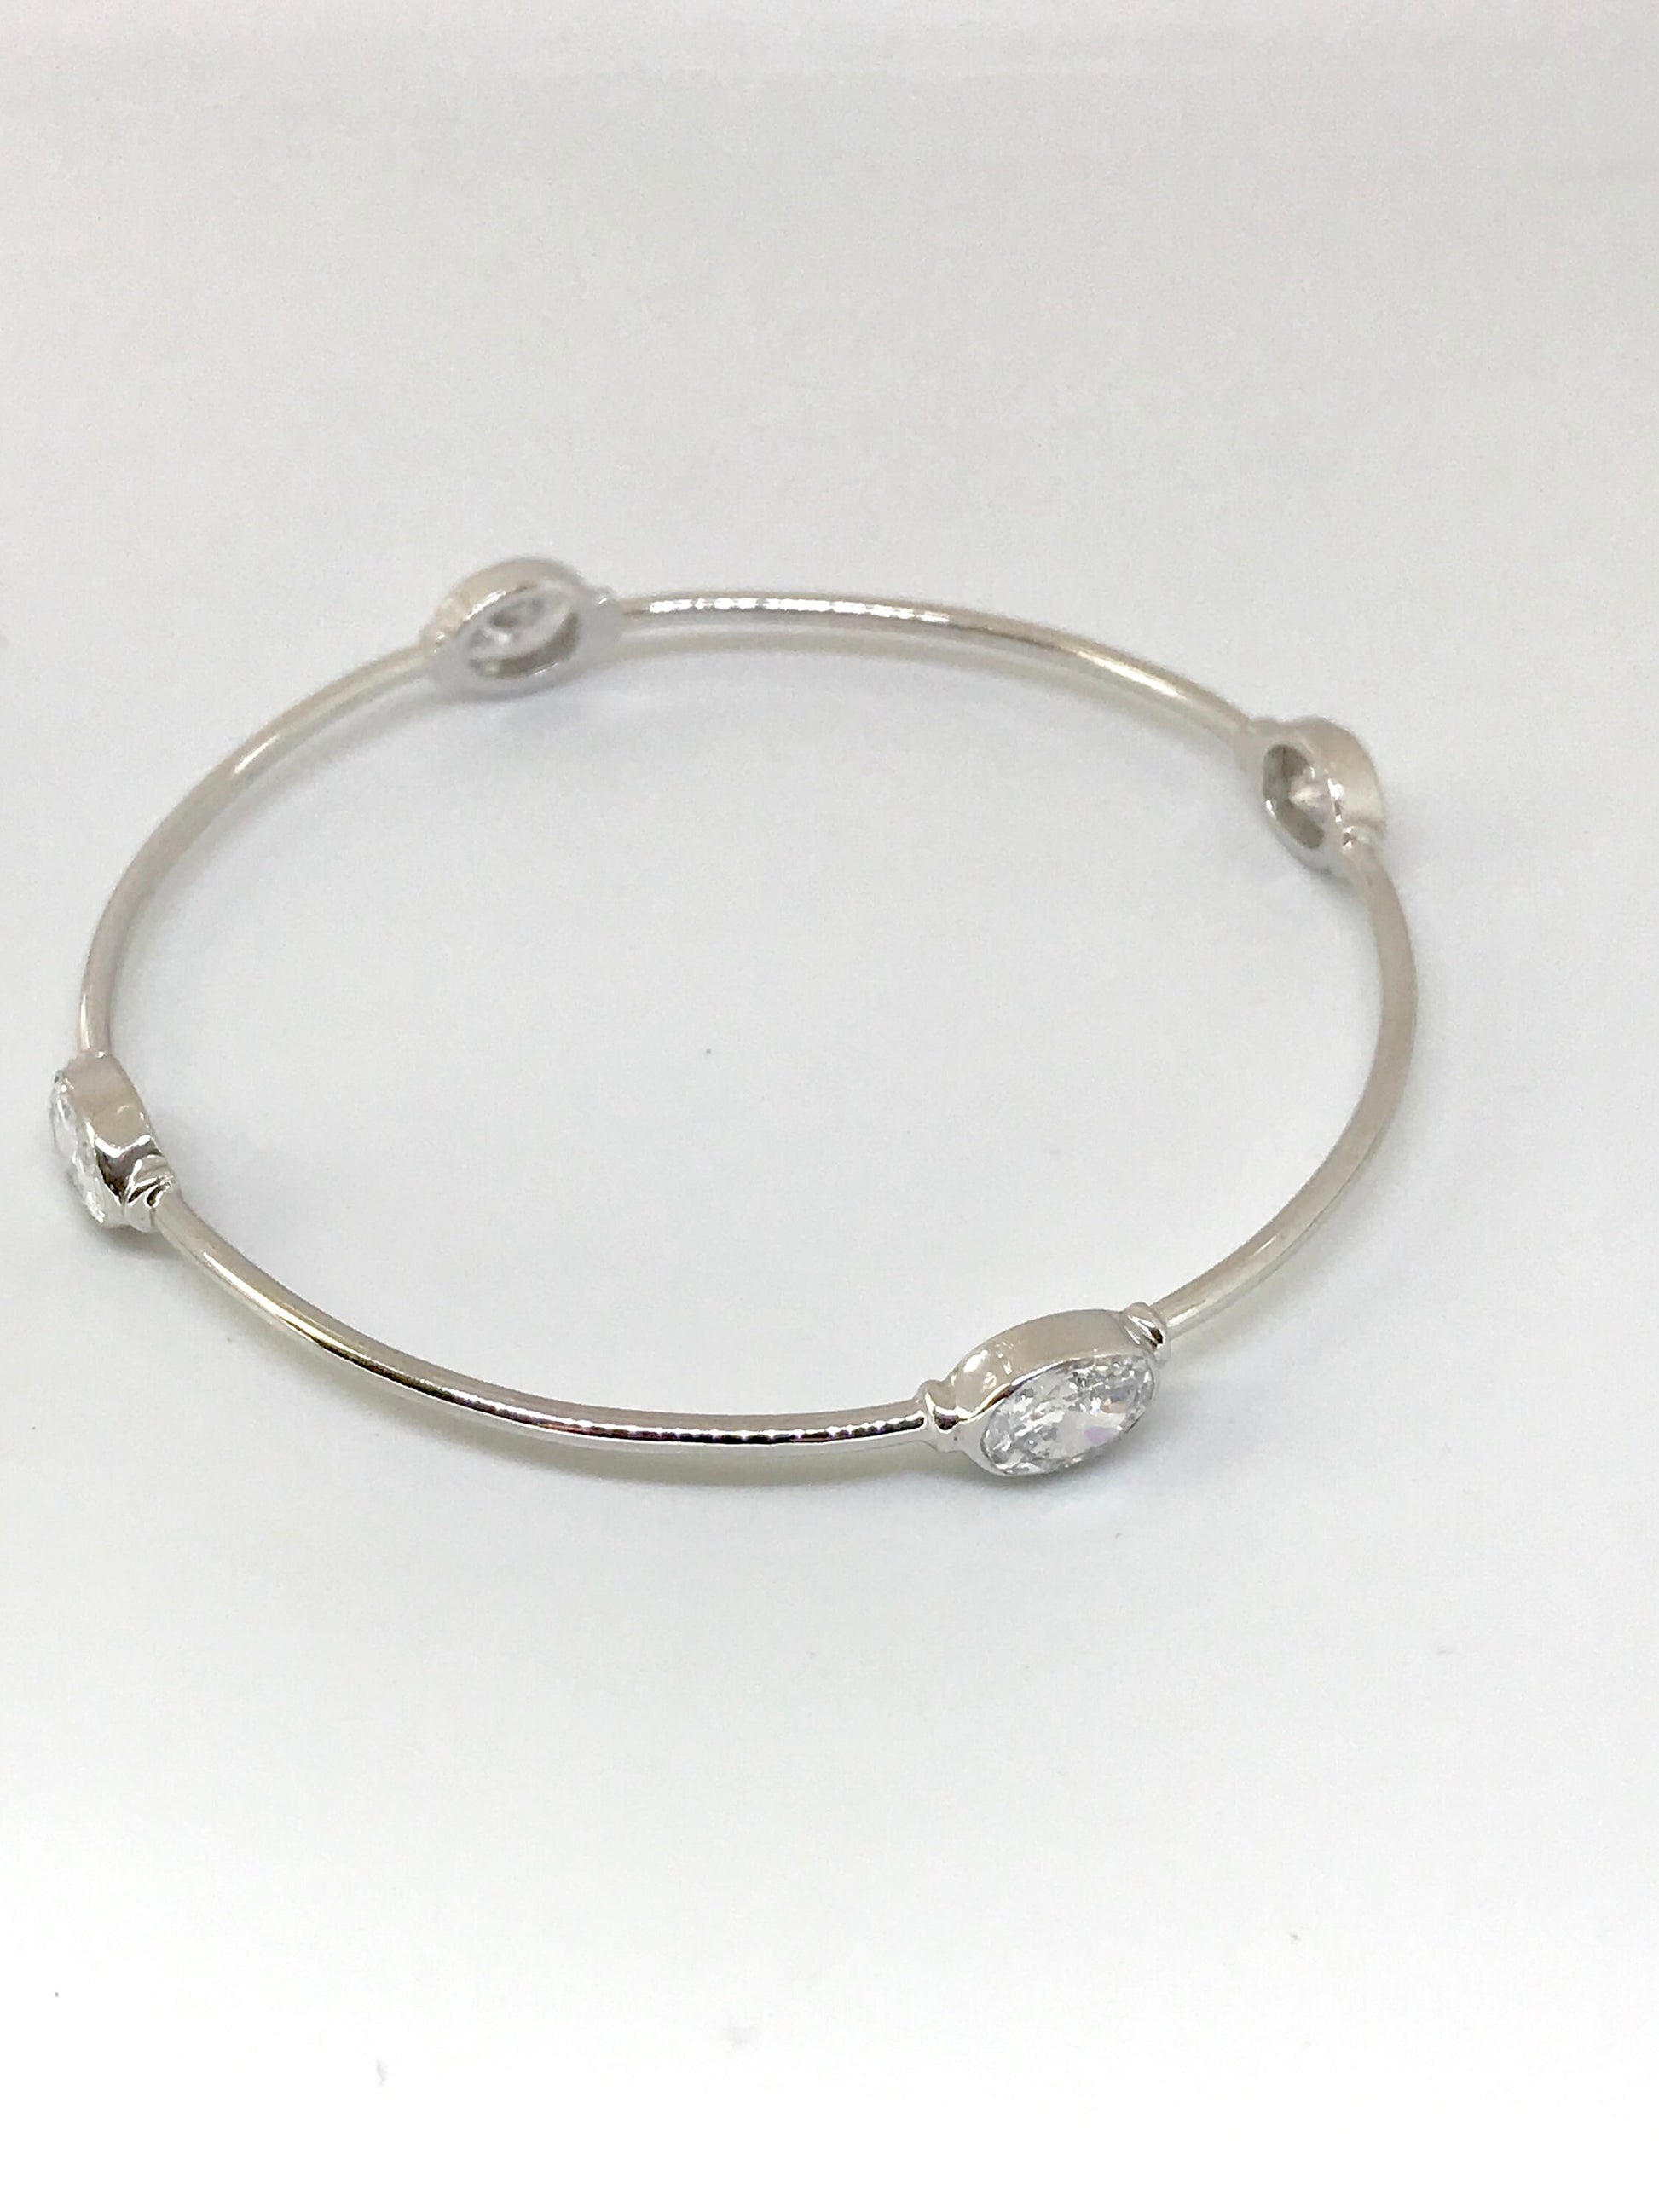 Cubic Zirconia Silver Bracelet, CZ Silver Bangle, Dainty Gemstone Bracelet, Mom Gift, Birthday Gift For Her, 6cm Diameter, Bridesmaid Gift